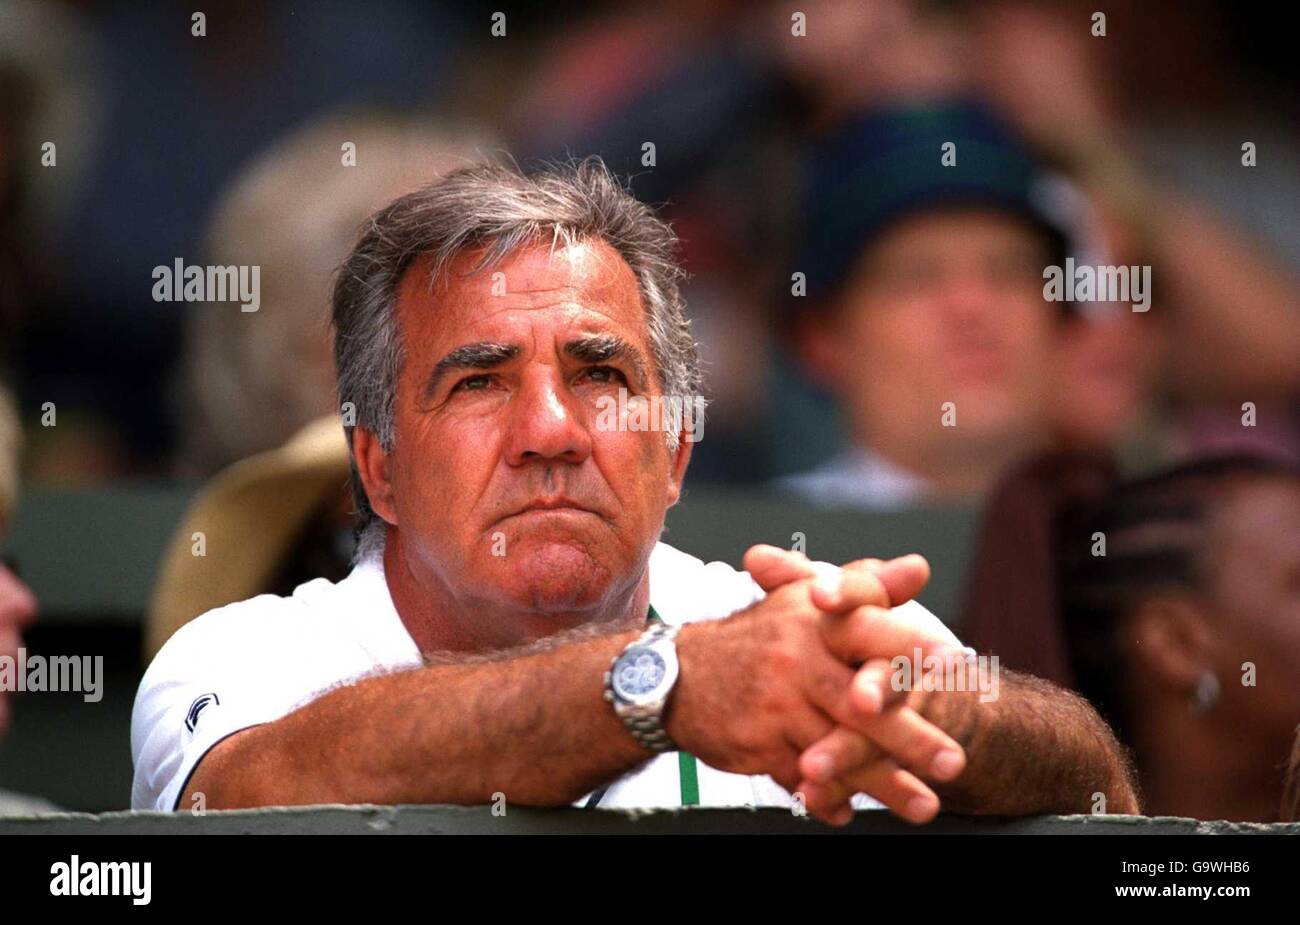 Tennis - Wimbledon 2001 - Quarter Final. Vater Capriati watches his daughter in action Stock Photo